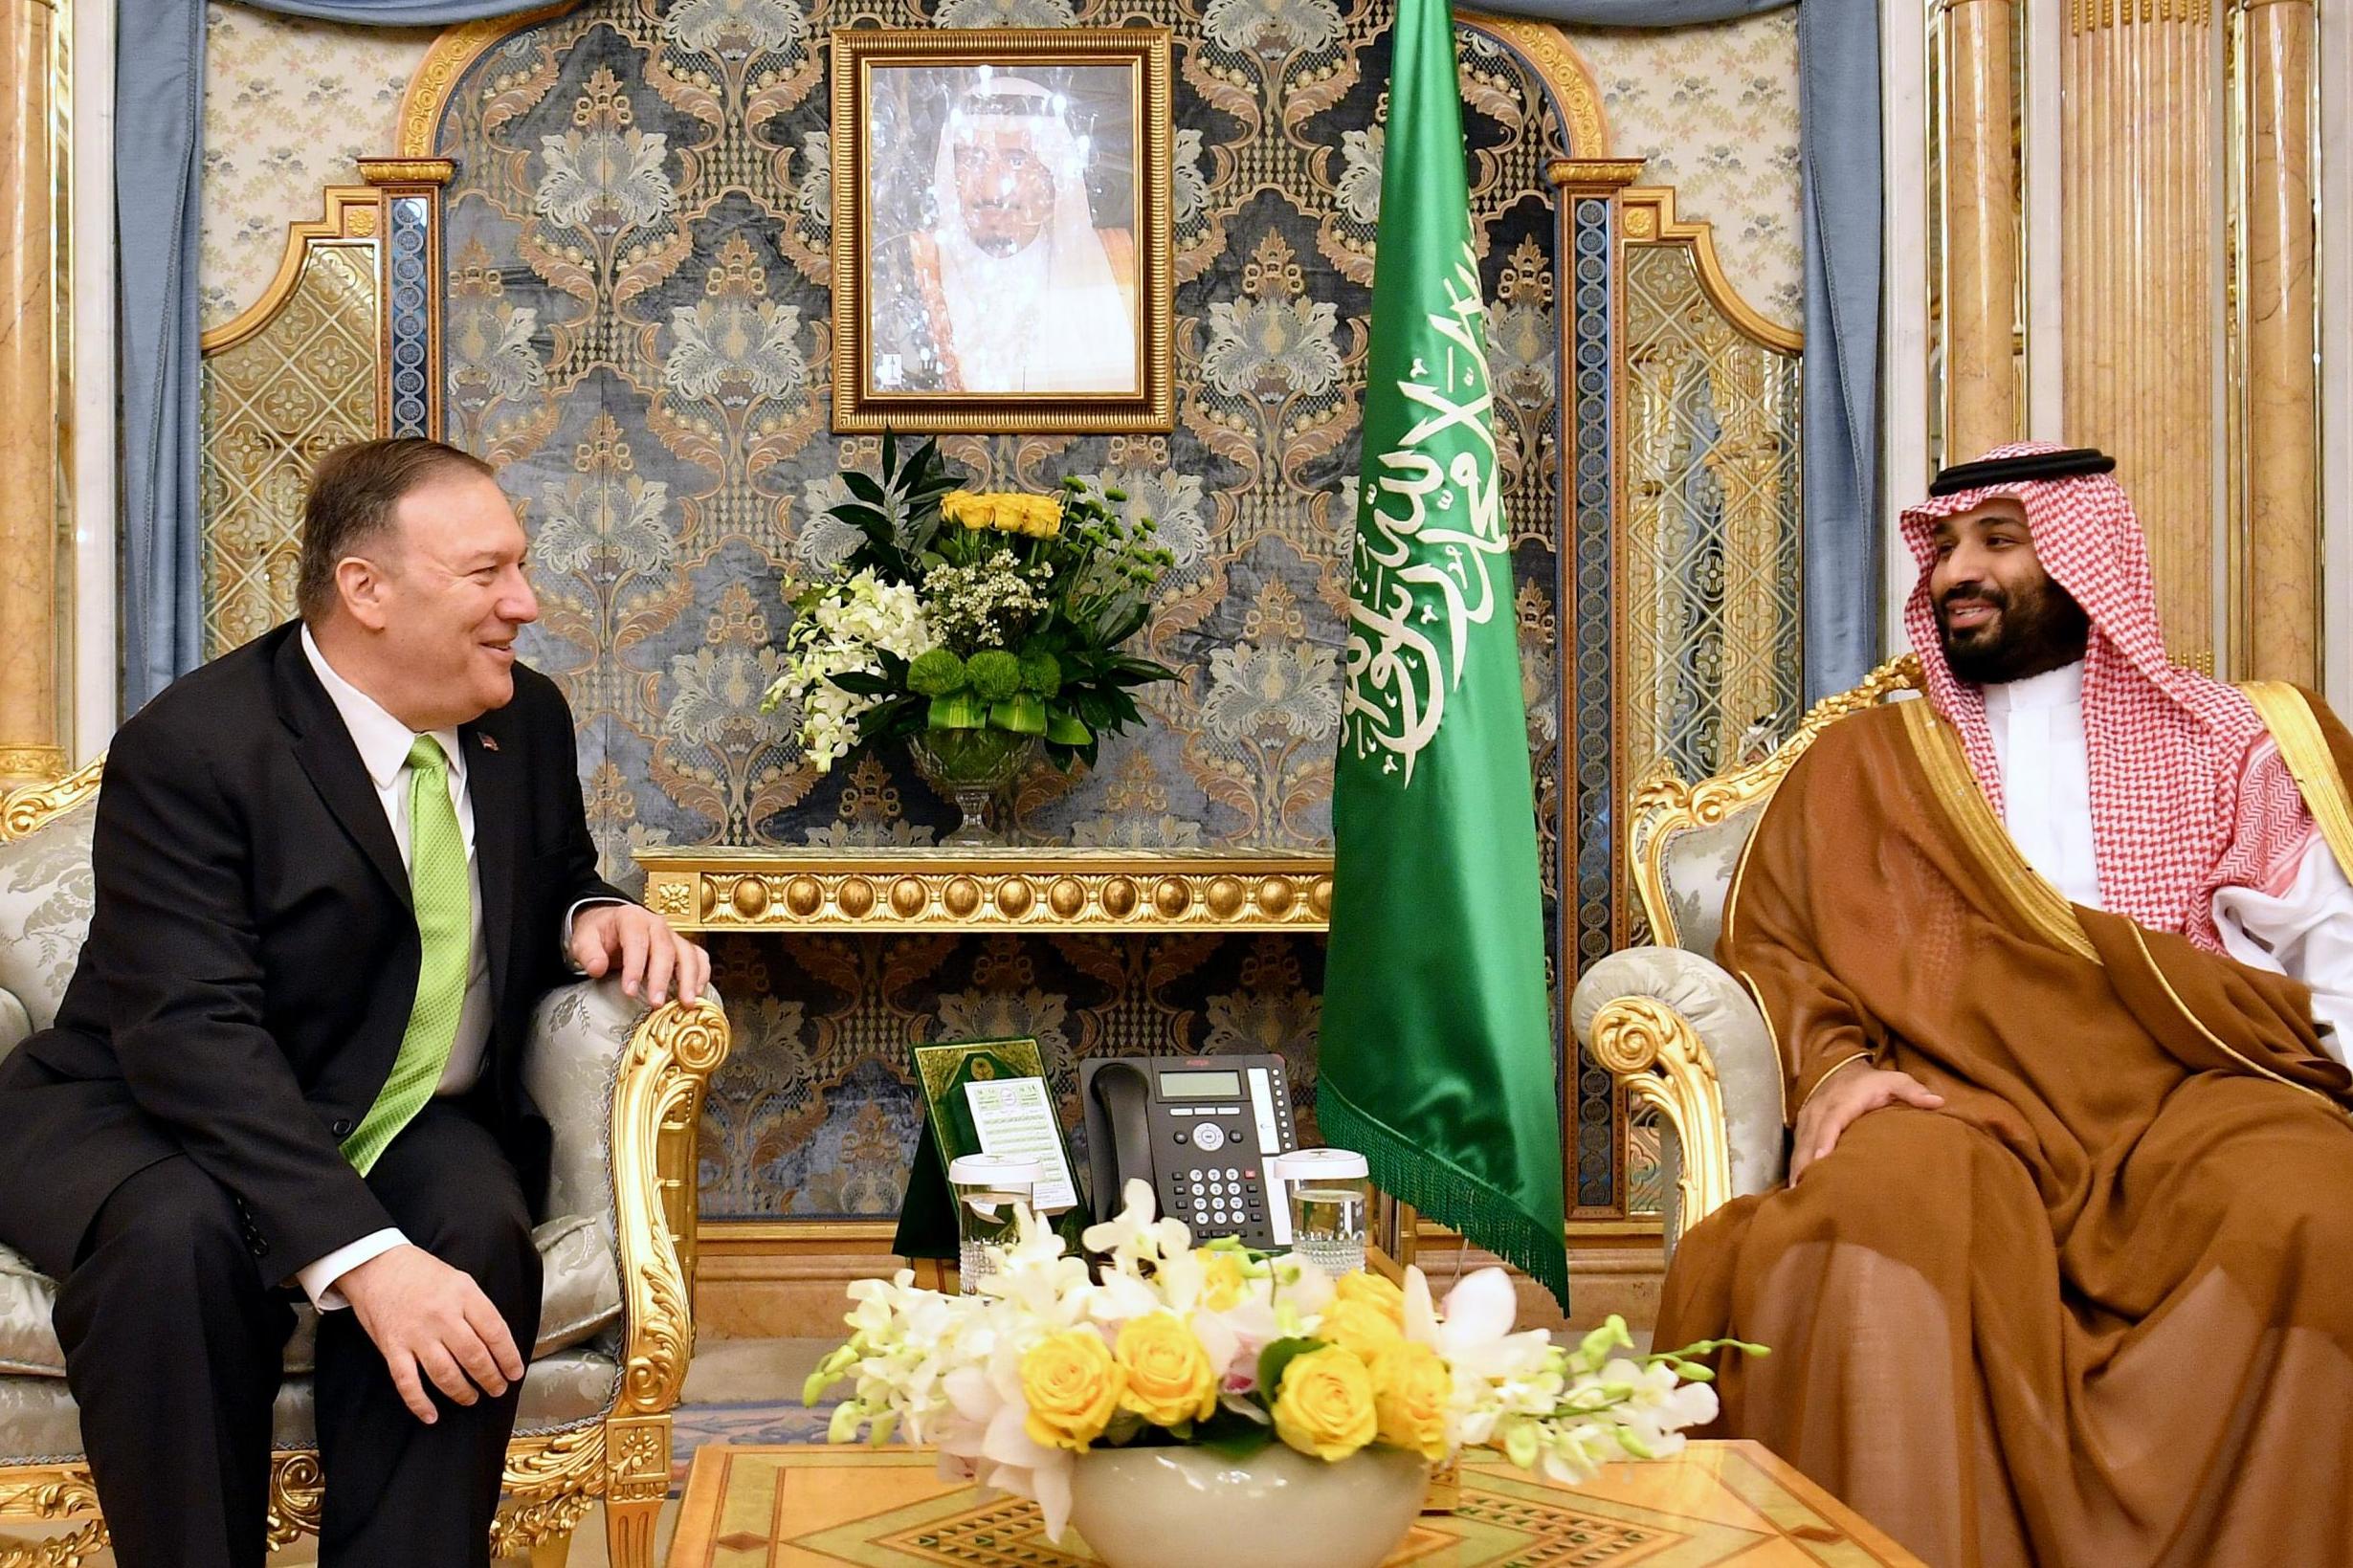 US secretary of state Mike Pompeo meeting Saudi crown prince Mohammed bin Salman in Jeddah this week